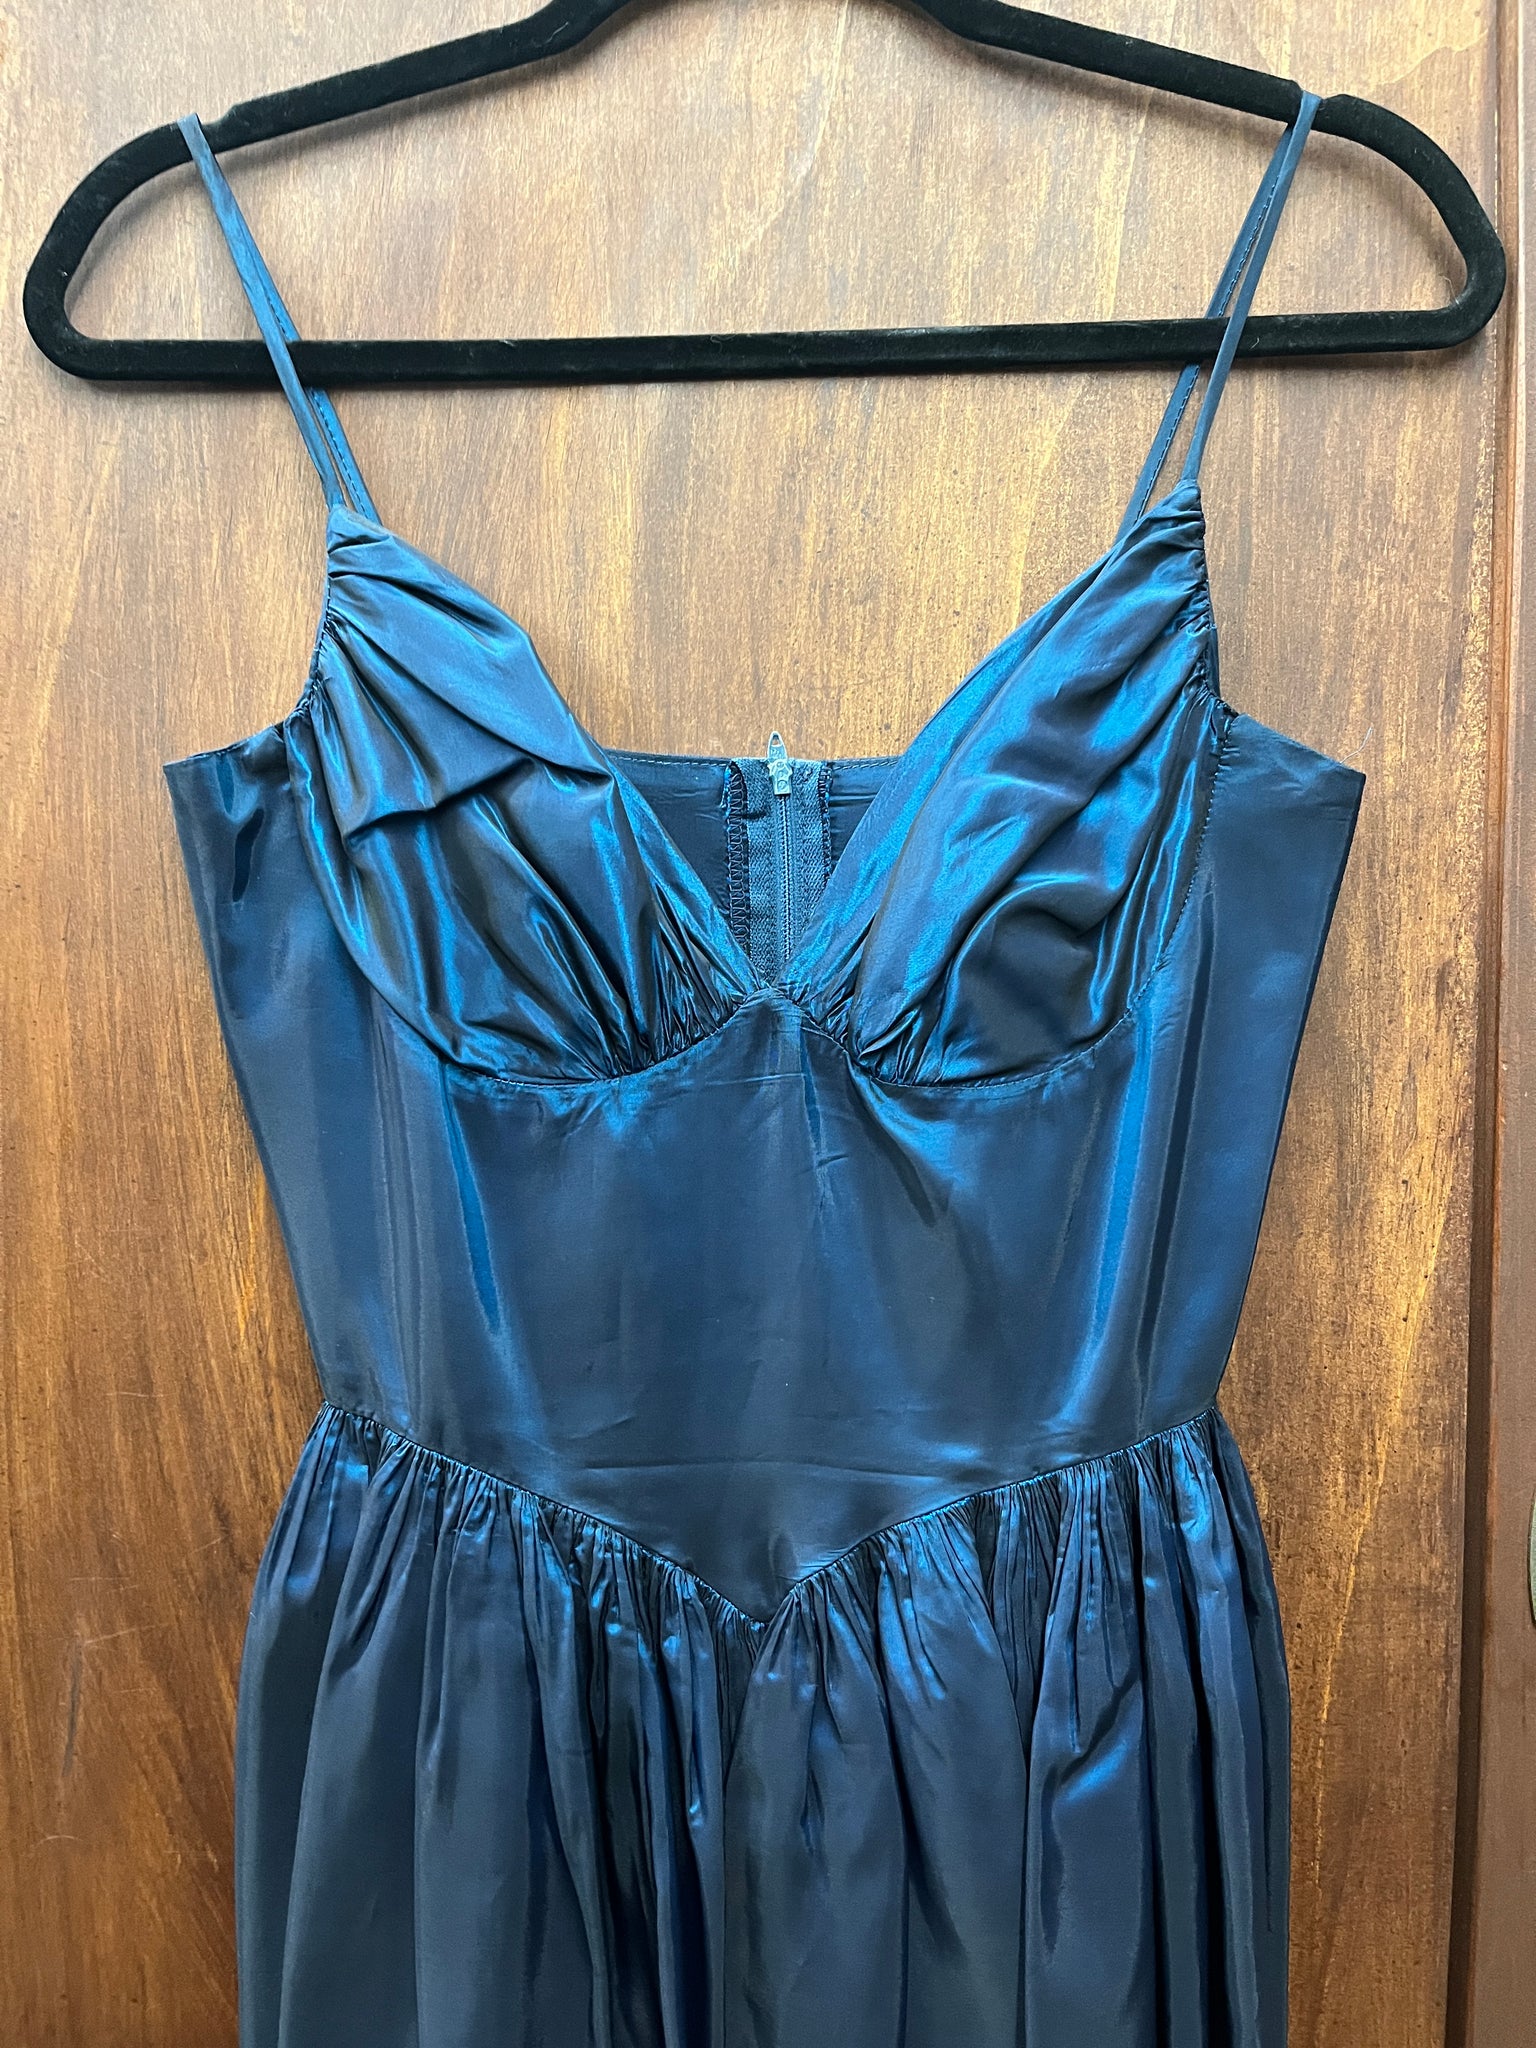 1980s DRESS- Casadei iridescent navy blue PROM